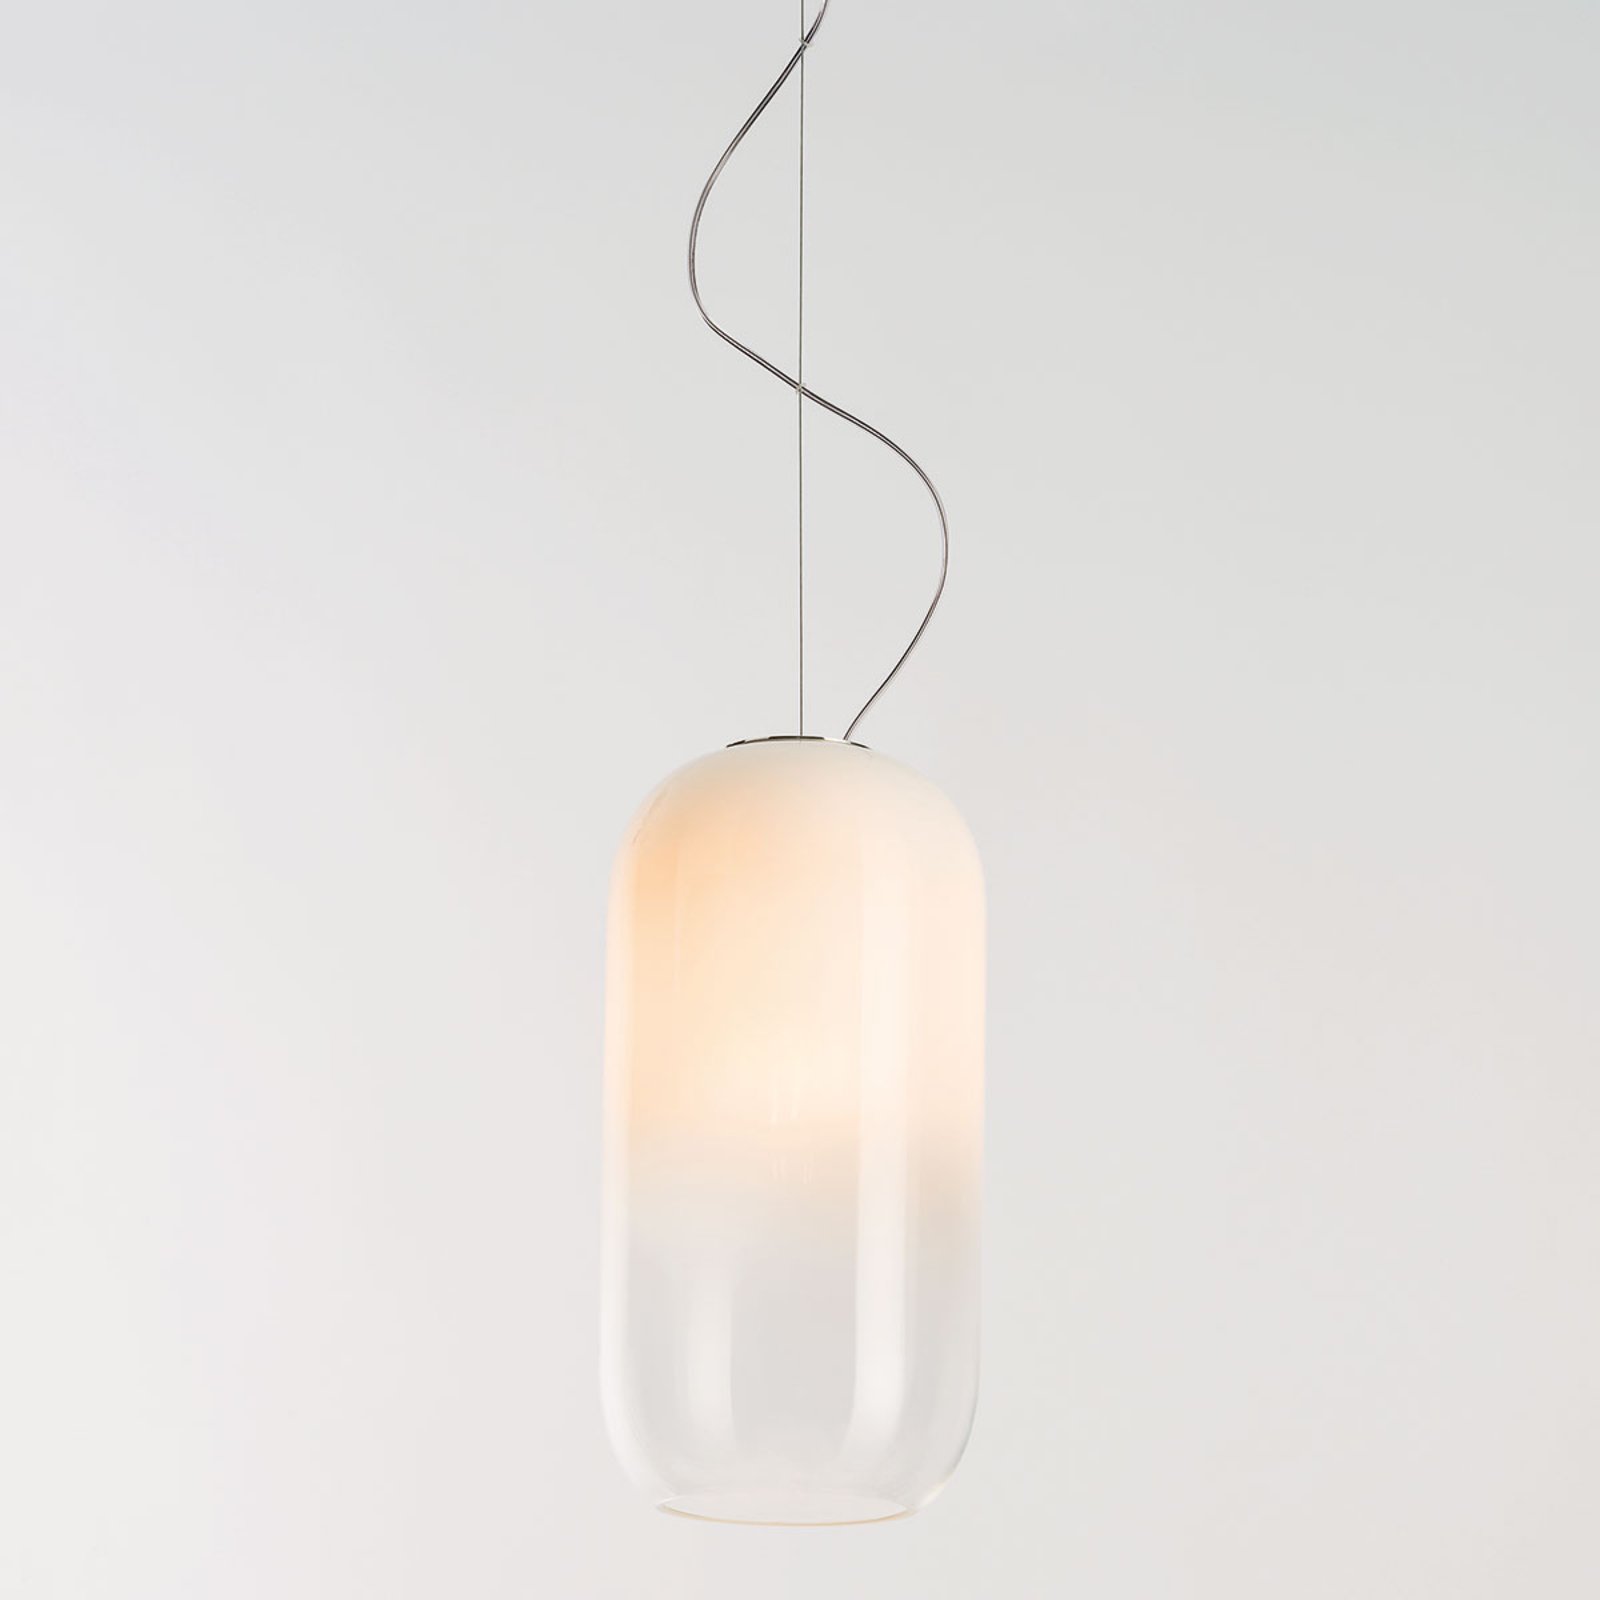 Artemide Gople üveg függő lámpa, fehér/ezüst